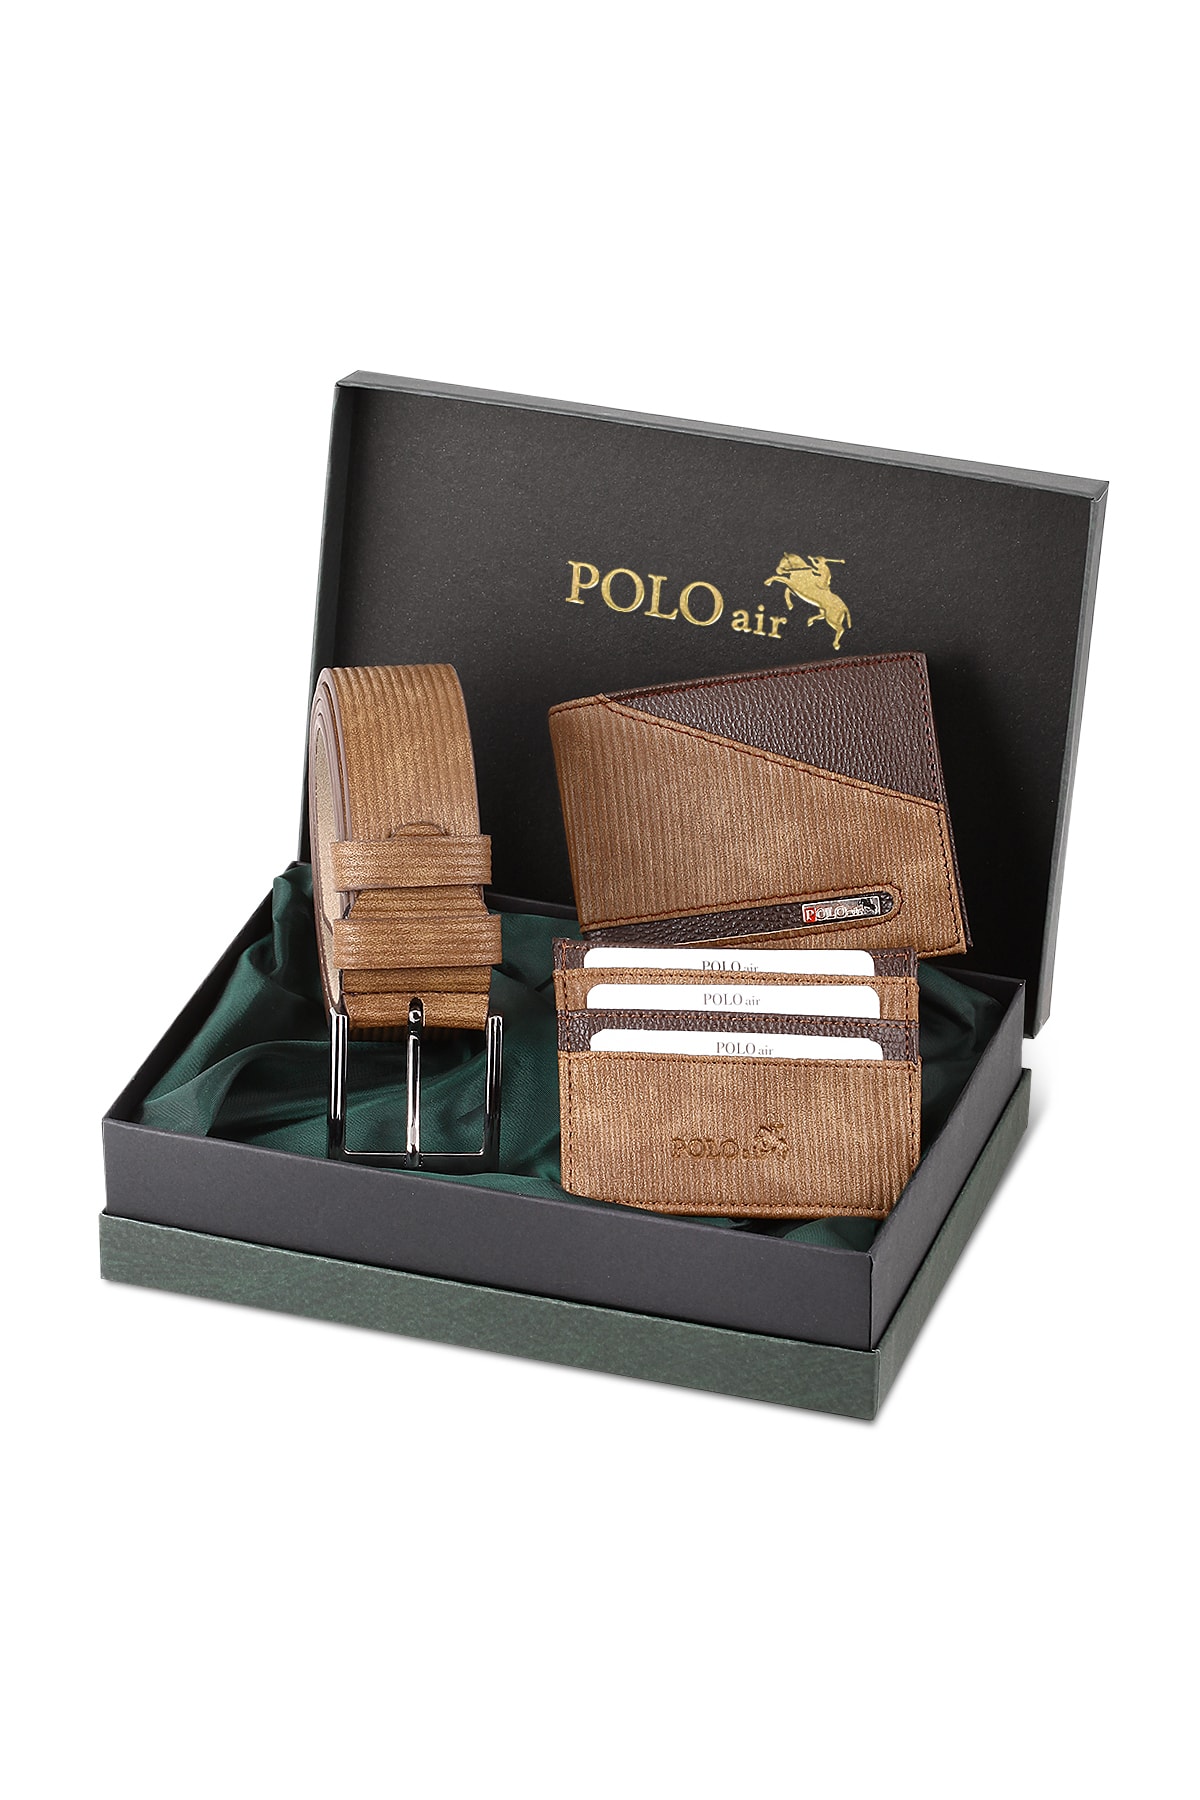 Polo Air Men's Mink Belt Wallet Card Holder Combination Set